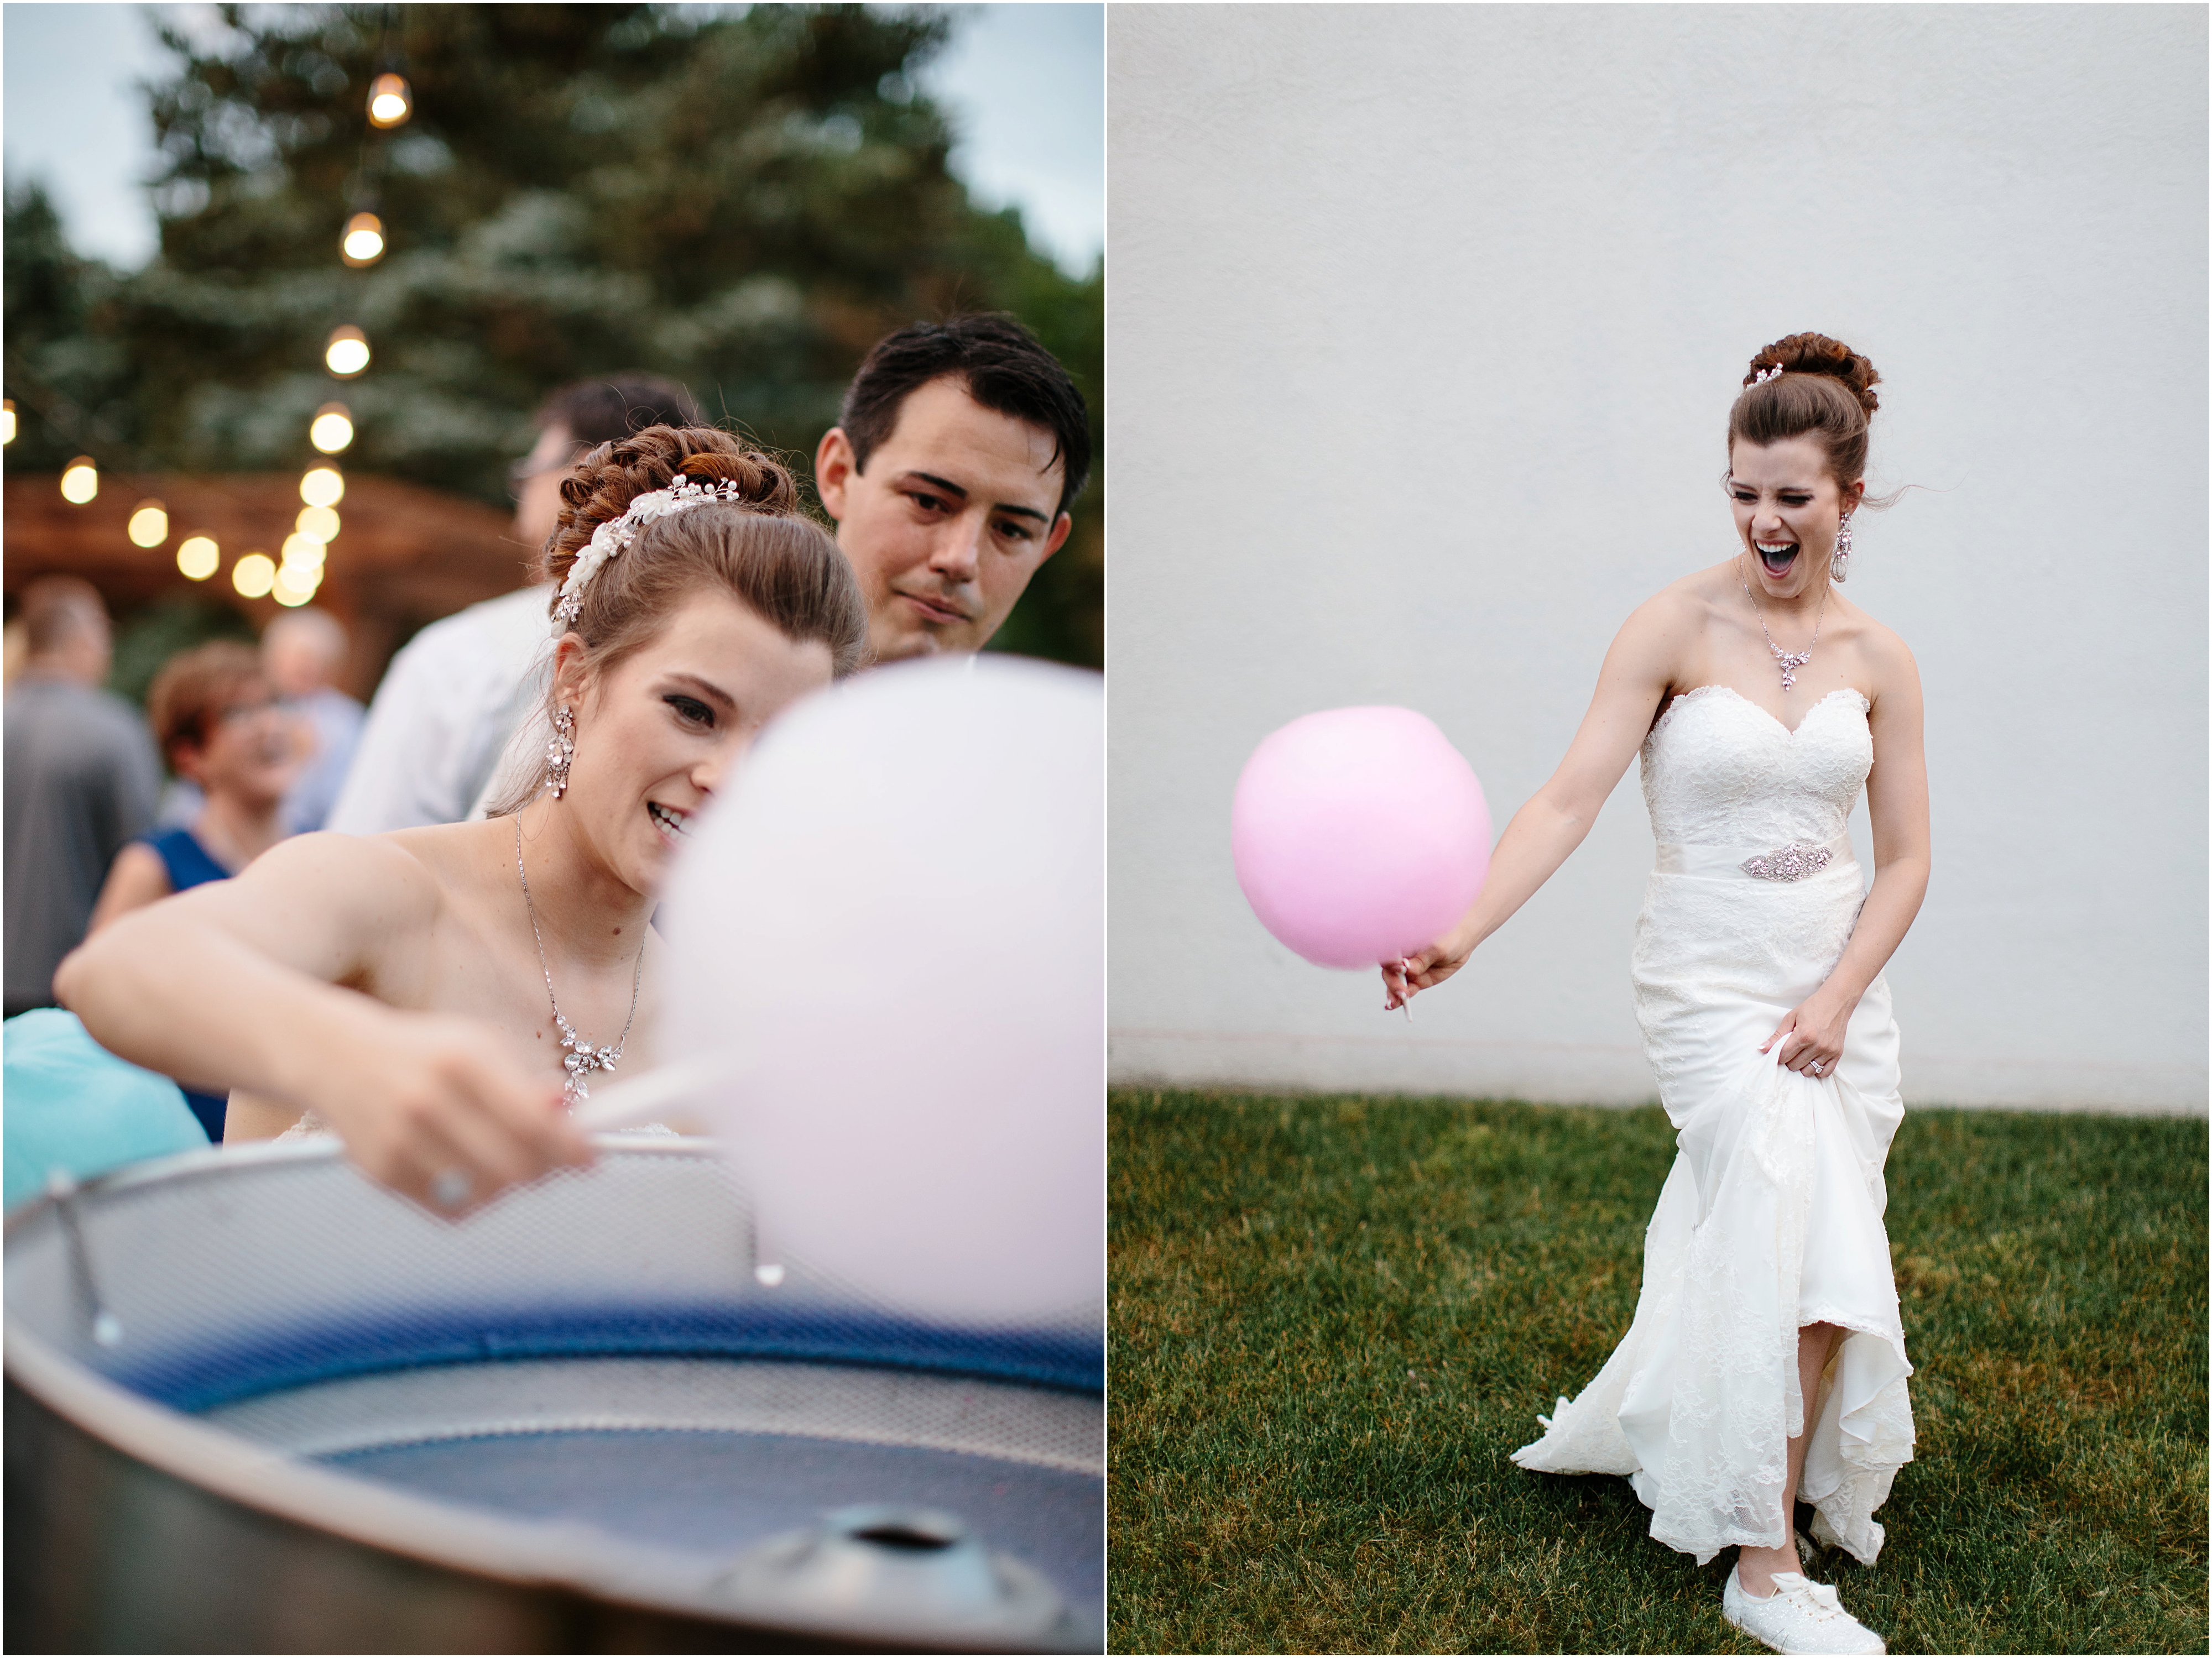 couple make cotton candy at their wedding reception